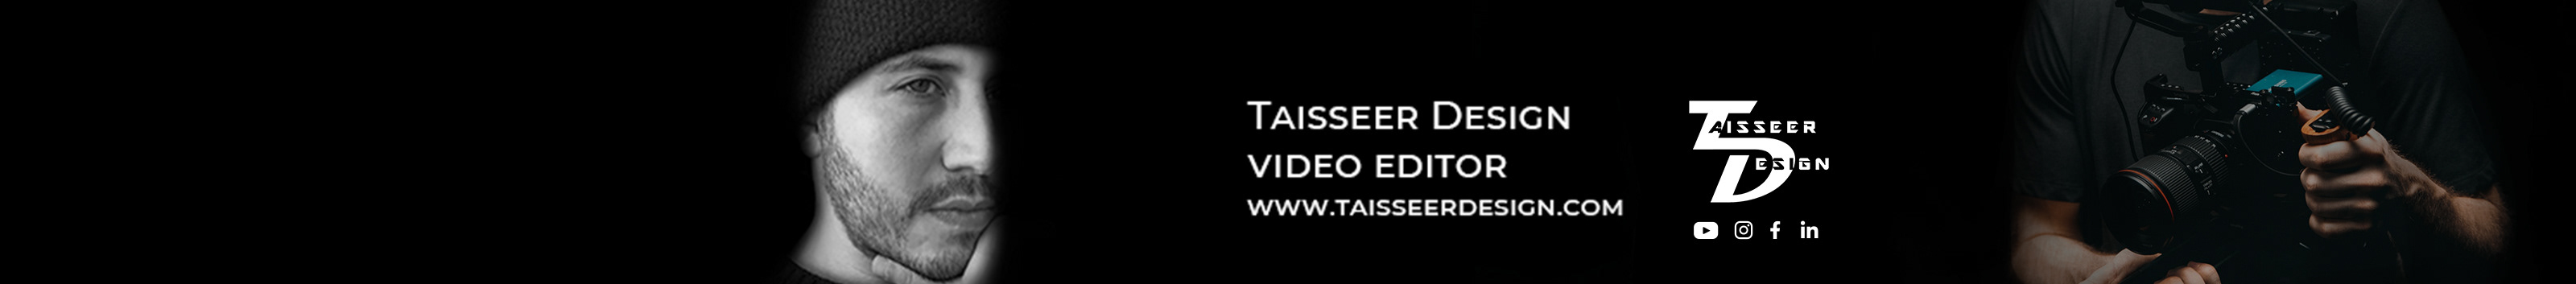 Taisseer Design's profile banner